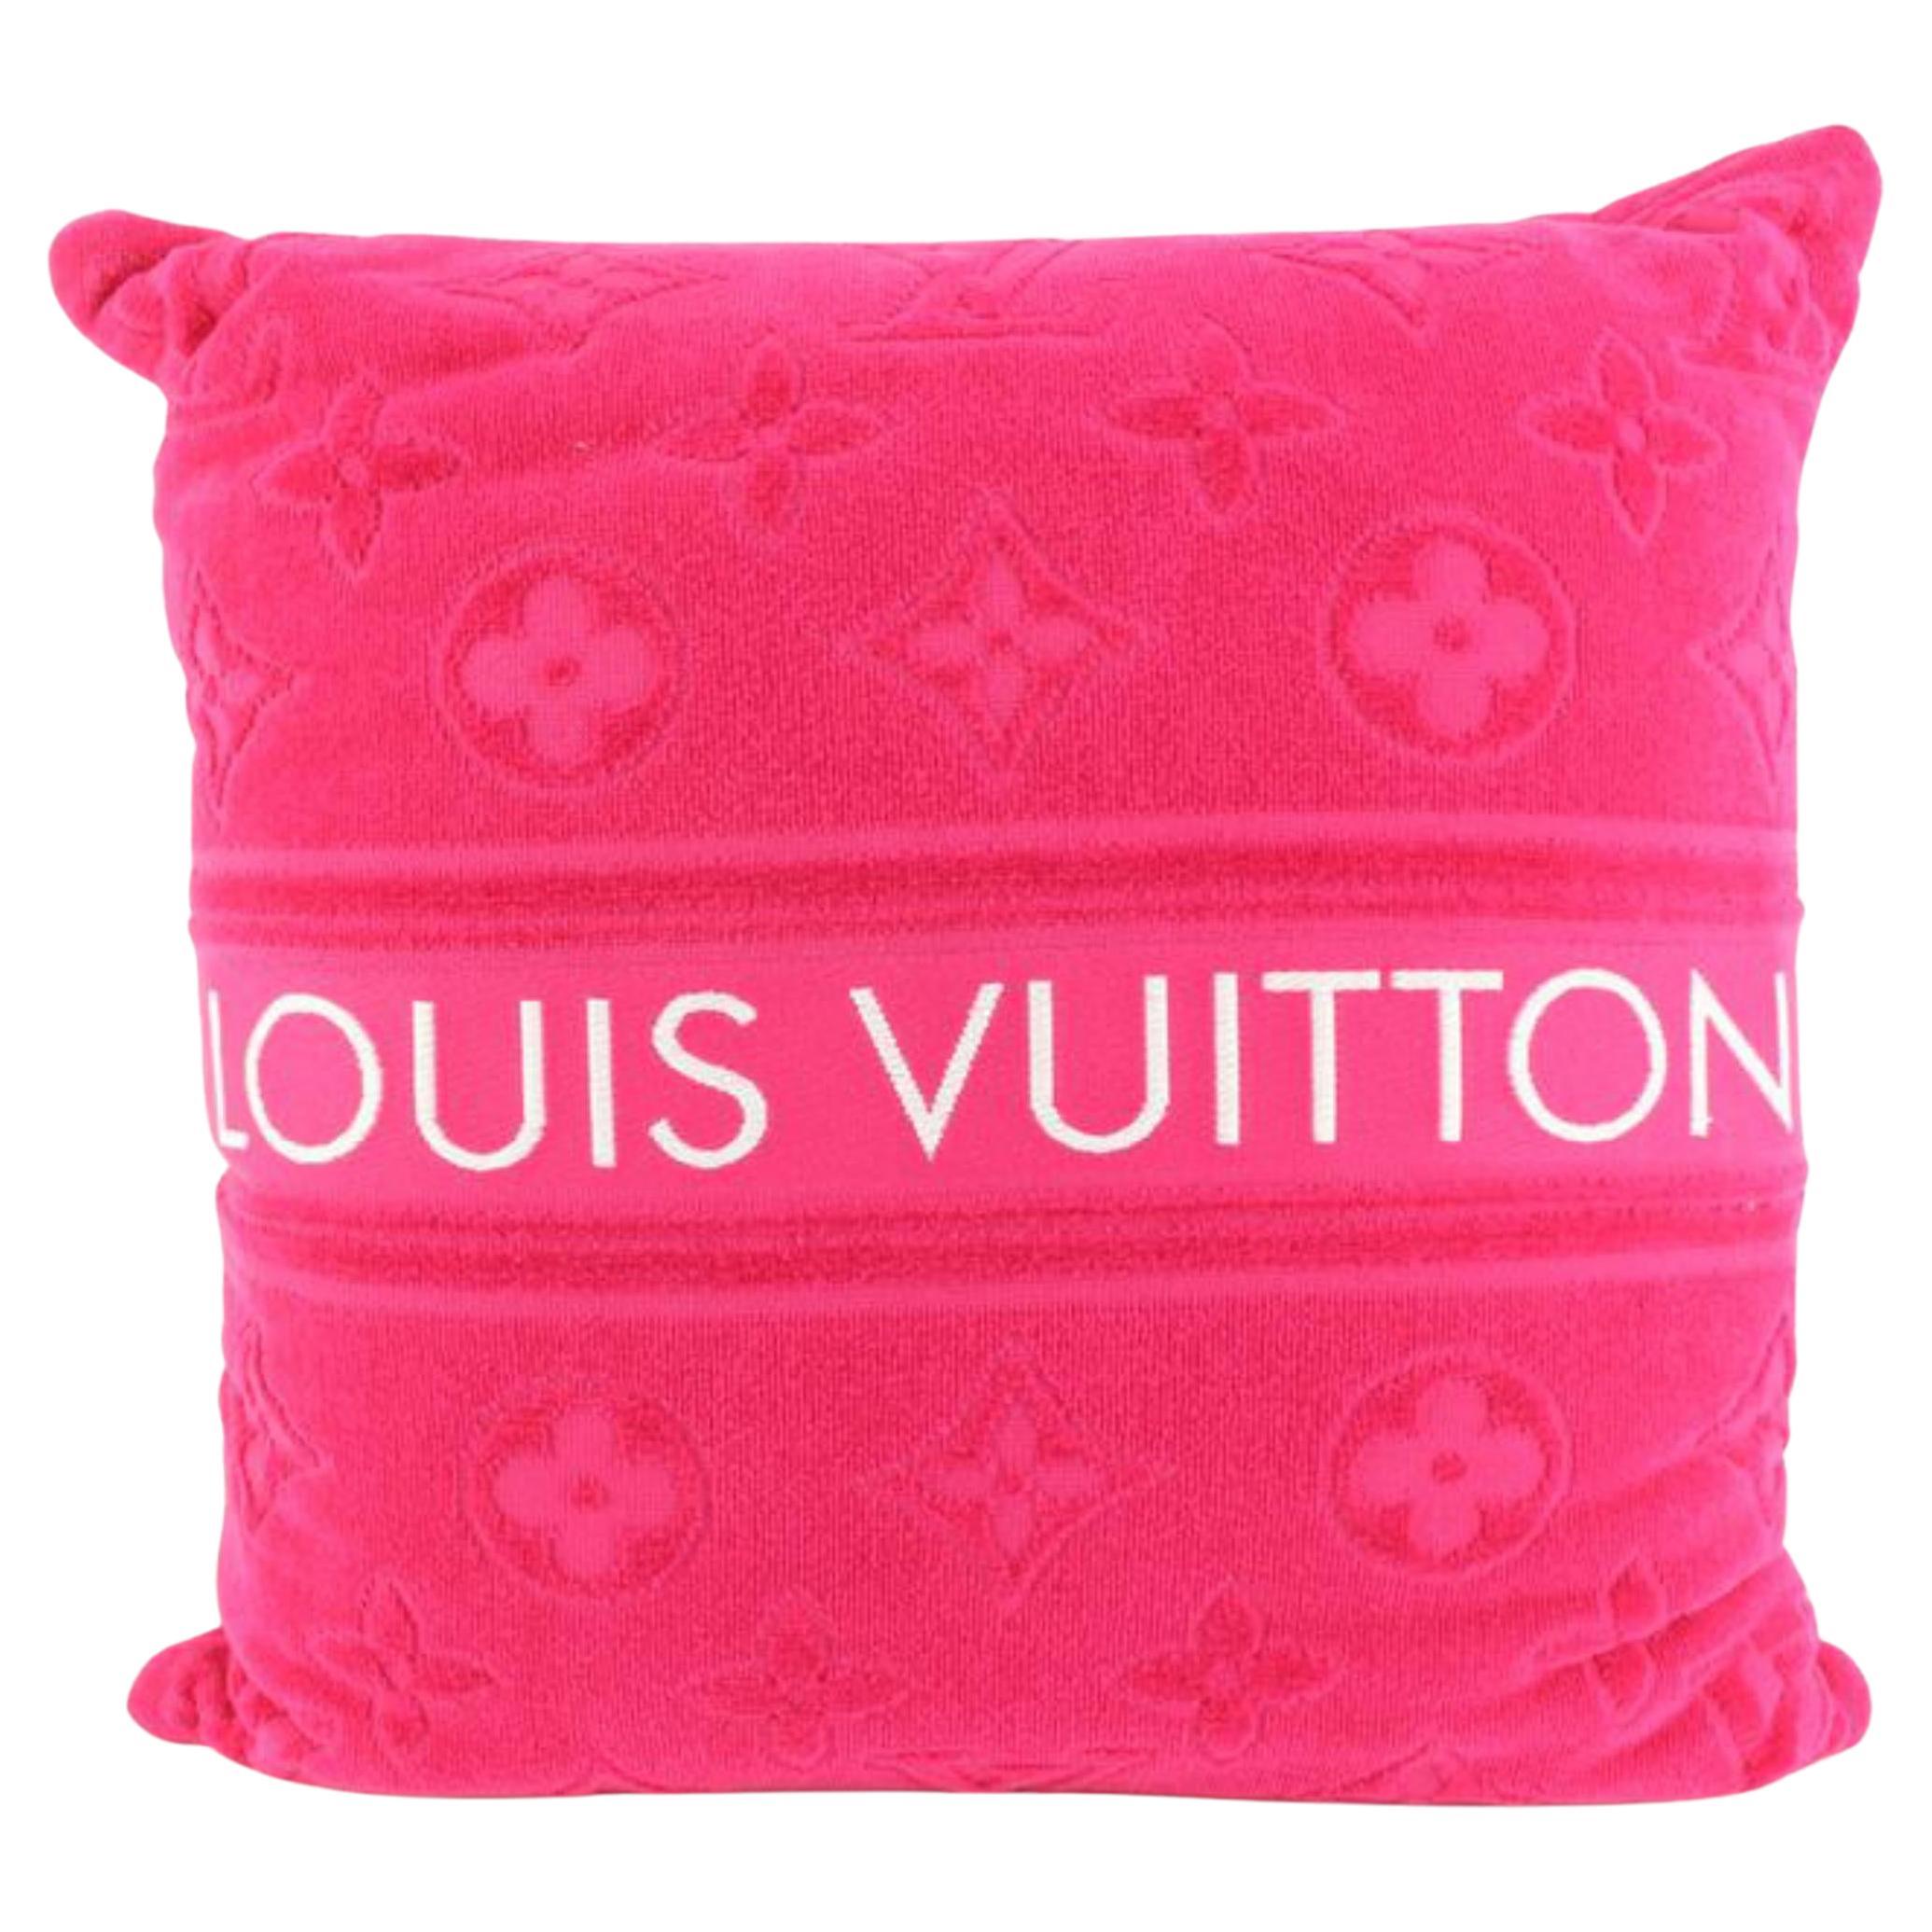 louis vuitton pillow bag pink